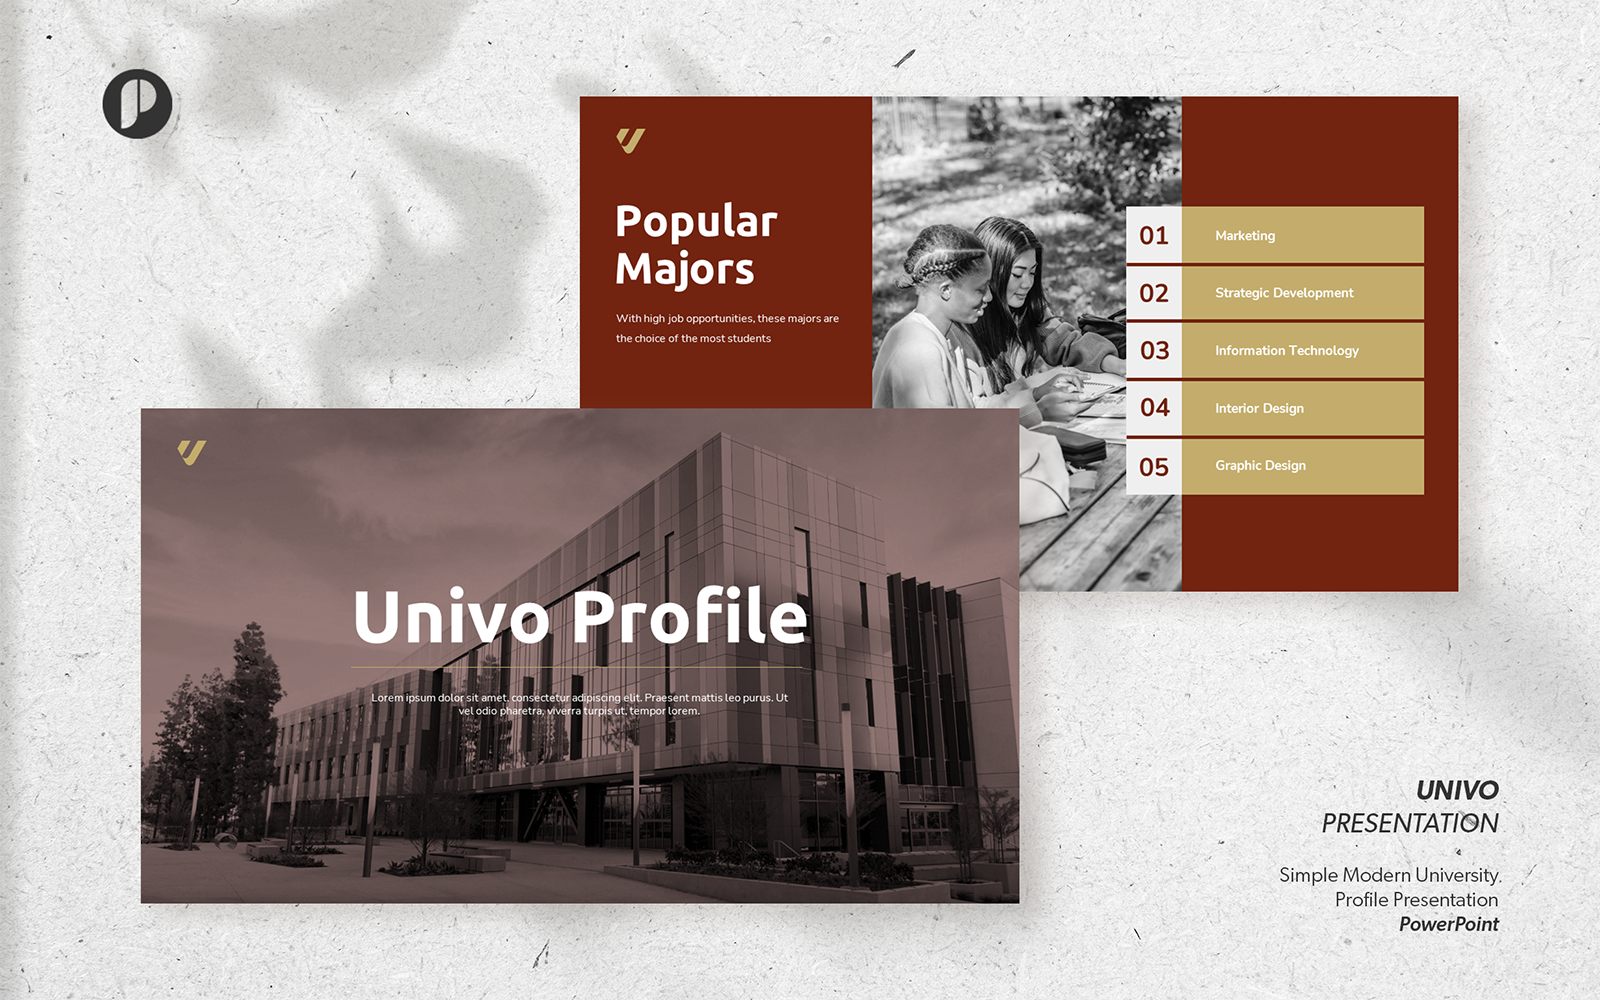 Univo – classy red simple modern university profile presentation